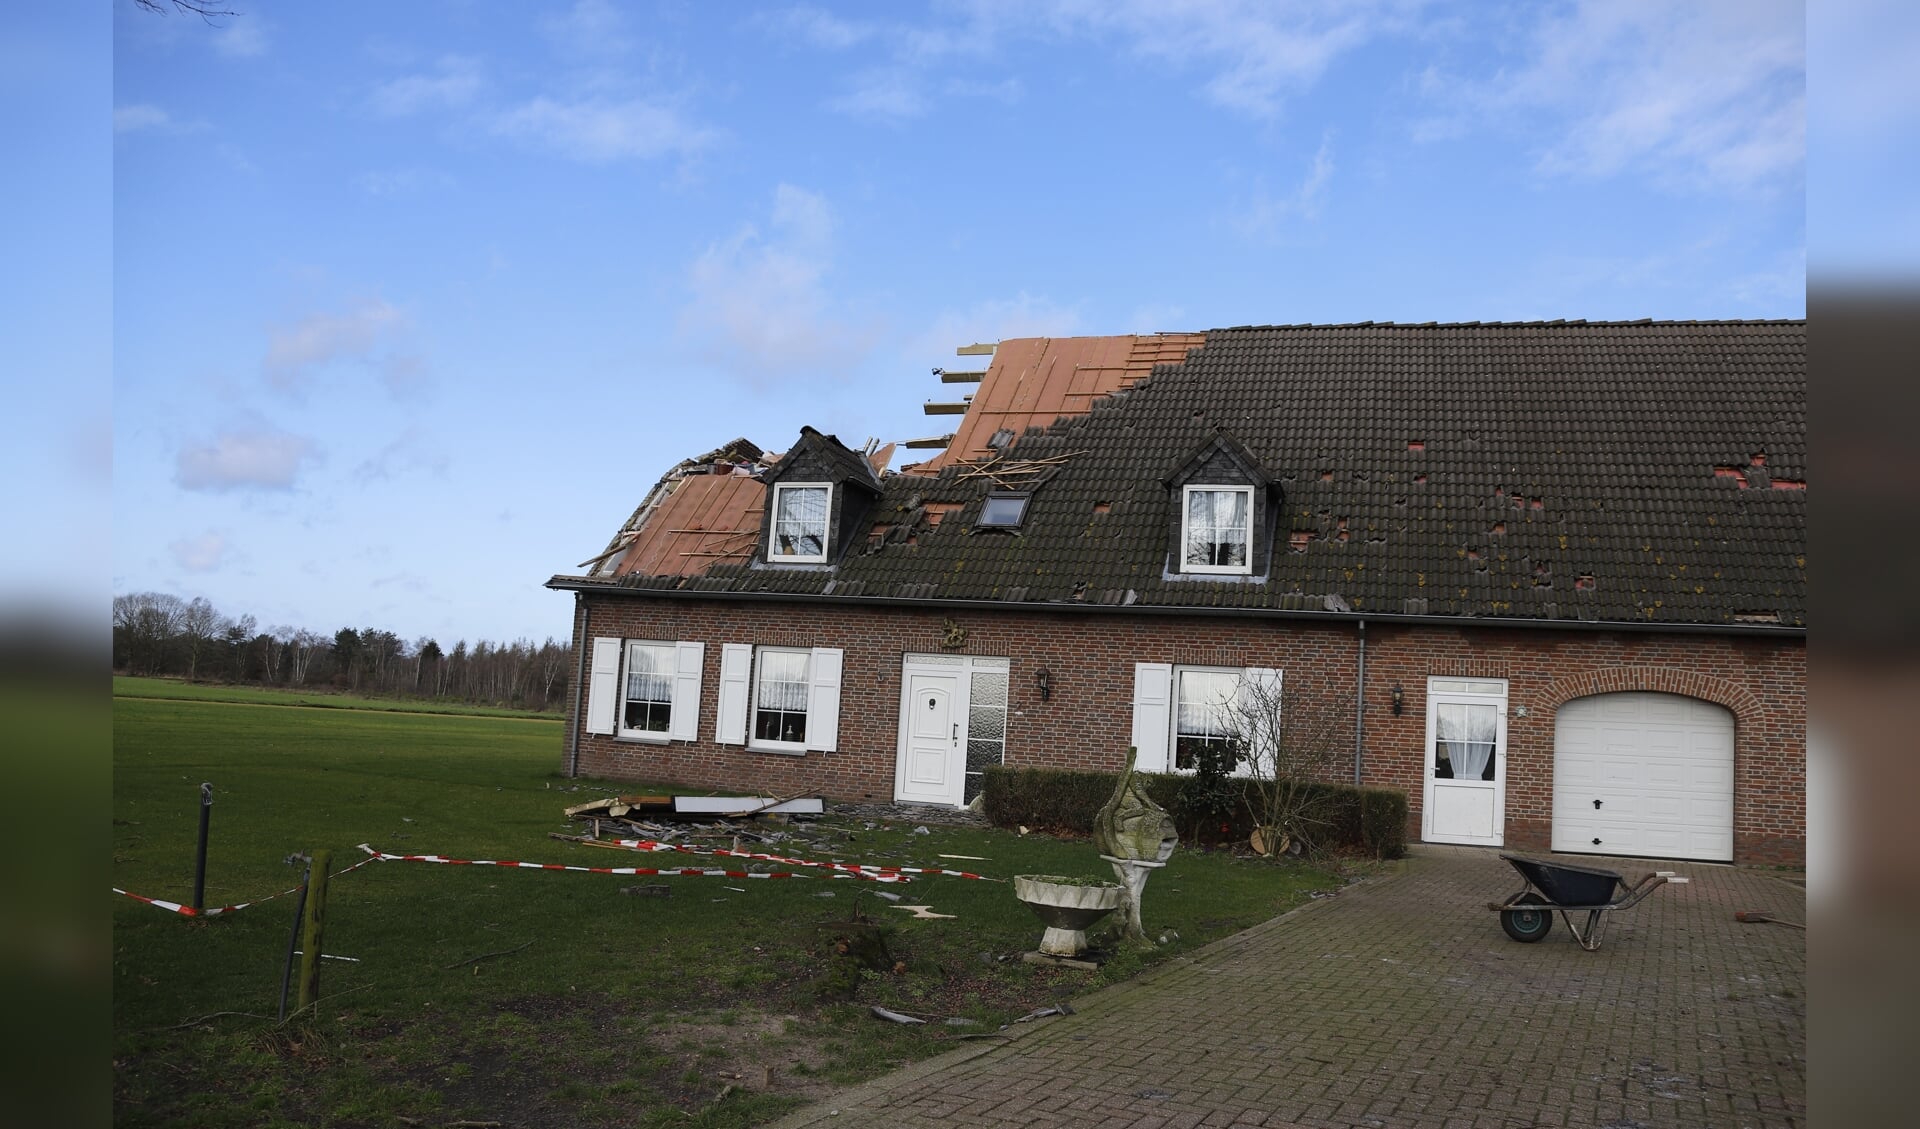 Flinke stormschade aan woning in Landhorst